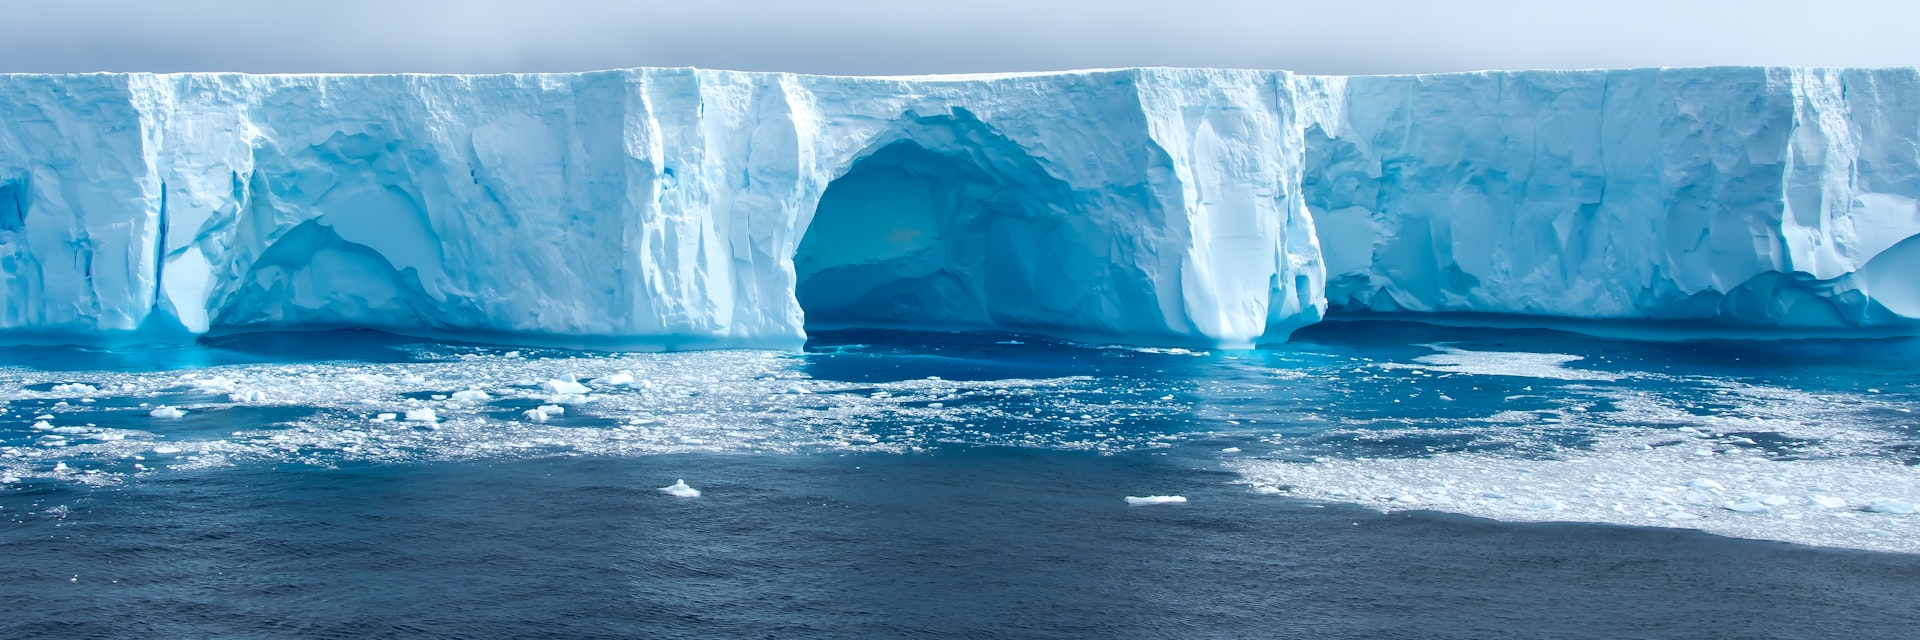 Beautiful blue iceberg and ice floe in Admiralty bay, King George Island Antarctica.